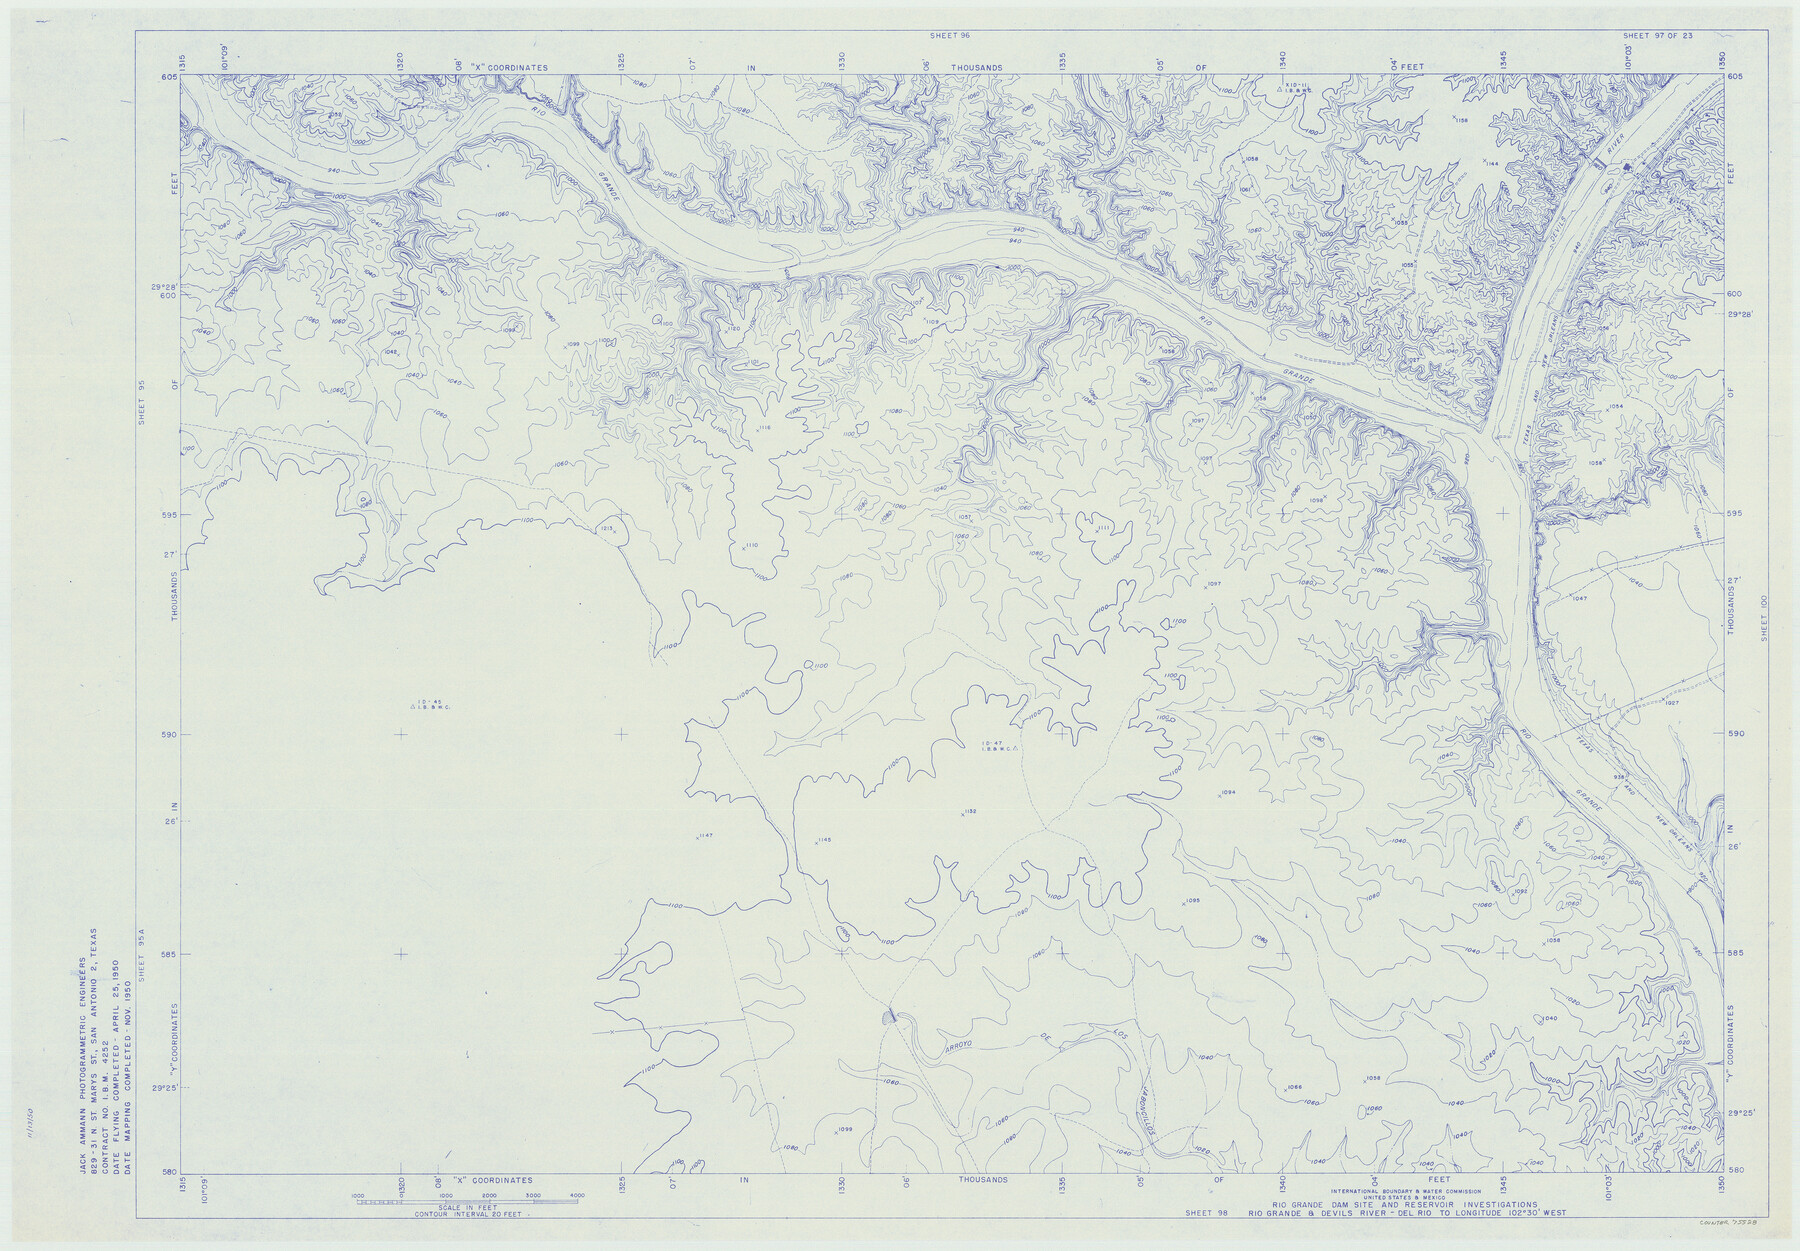 75528, Amistad International Reservoir on Rio Grande 97, General Map Collection